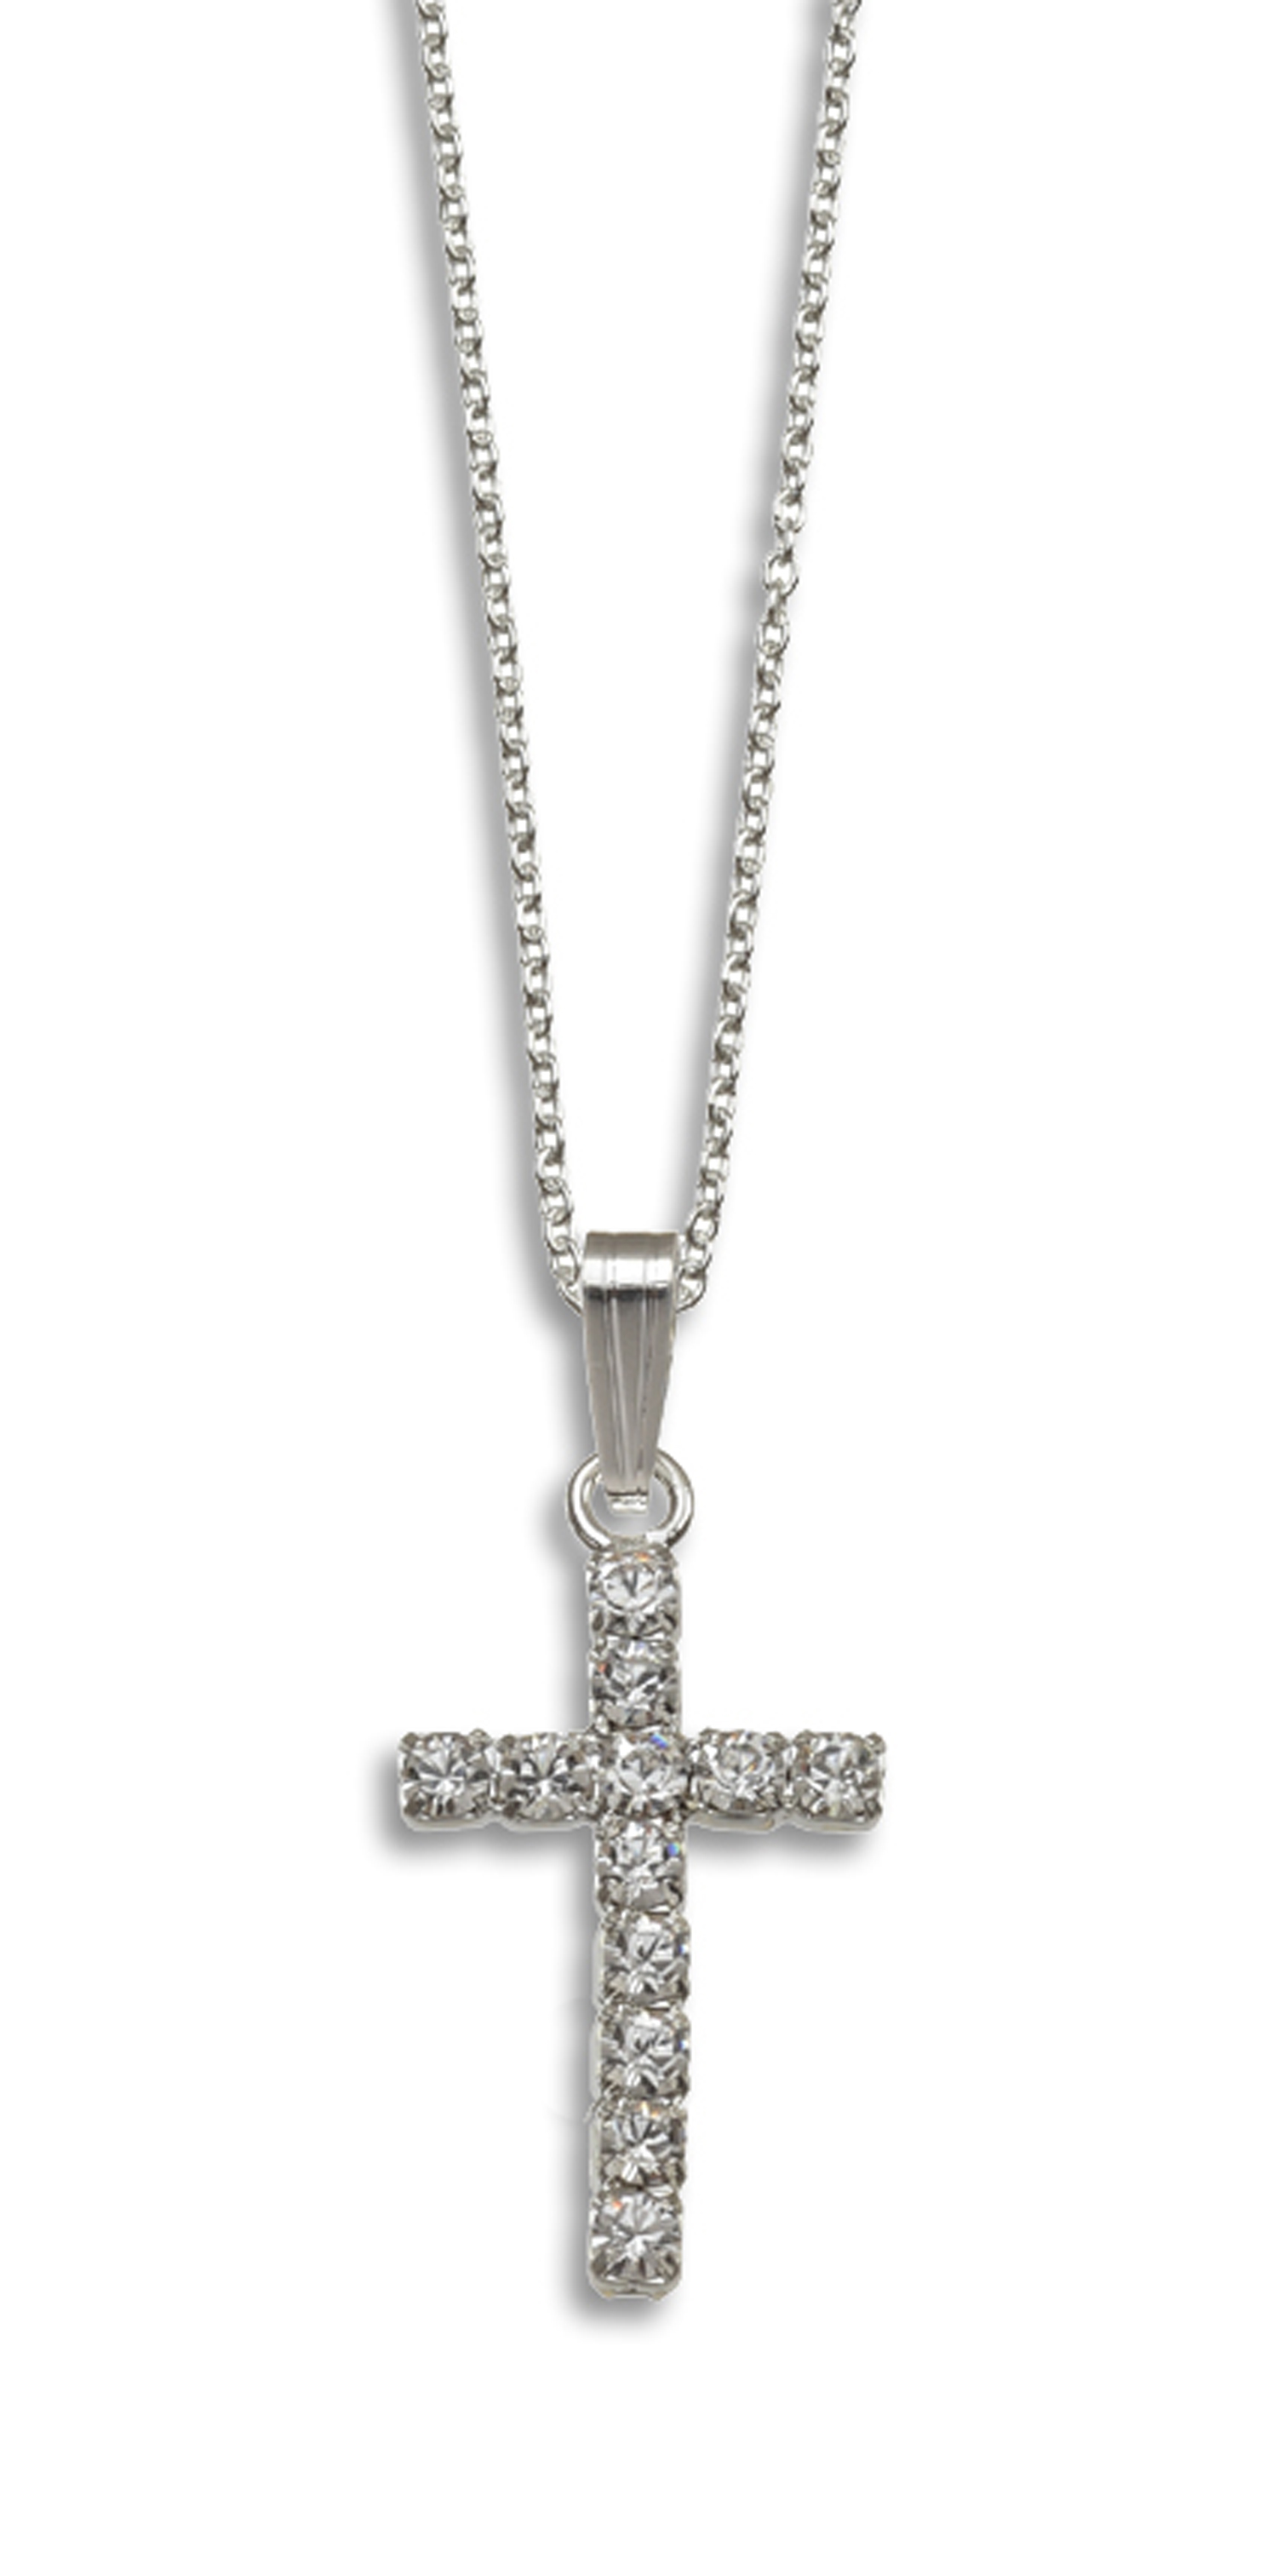 Swarovski Crystal Cross Pendant: Free Delivery at Eden.co.uk